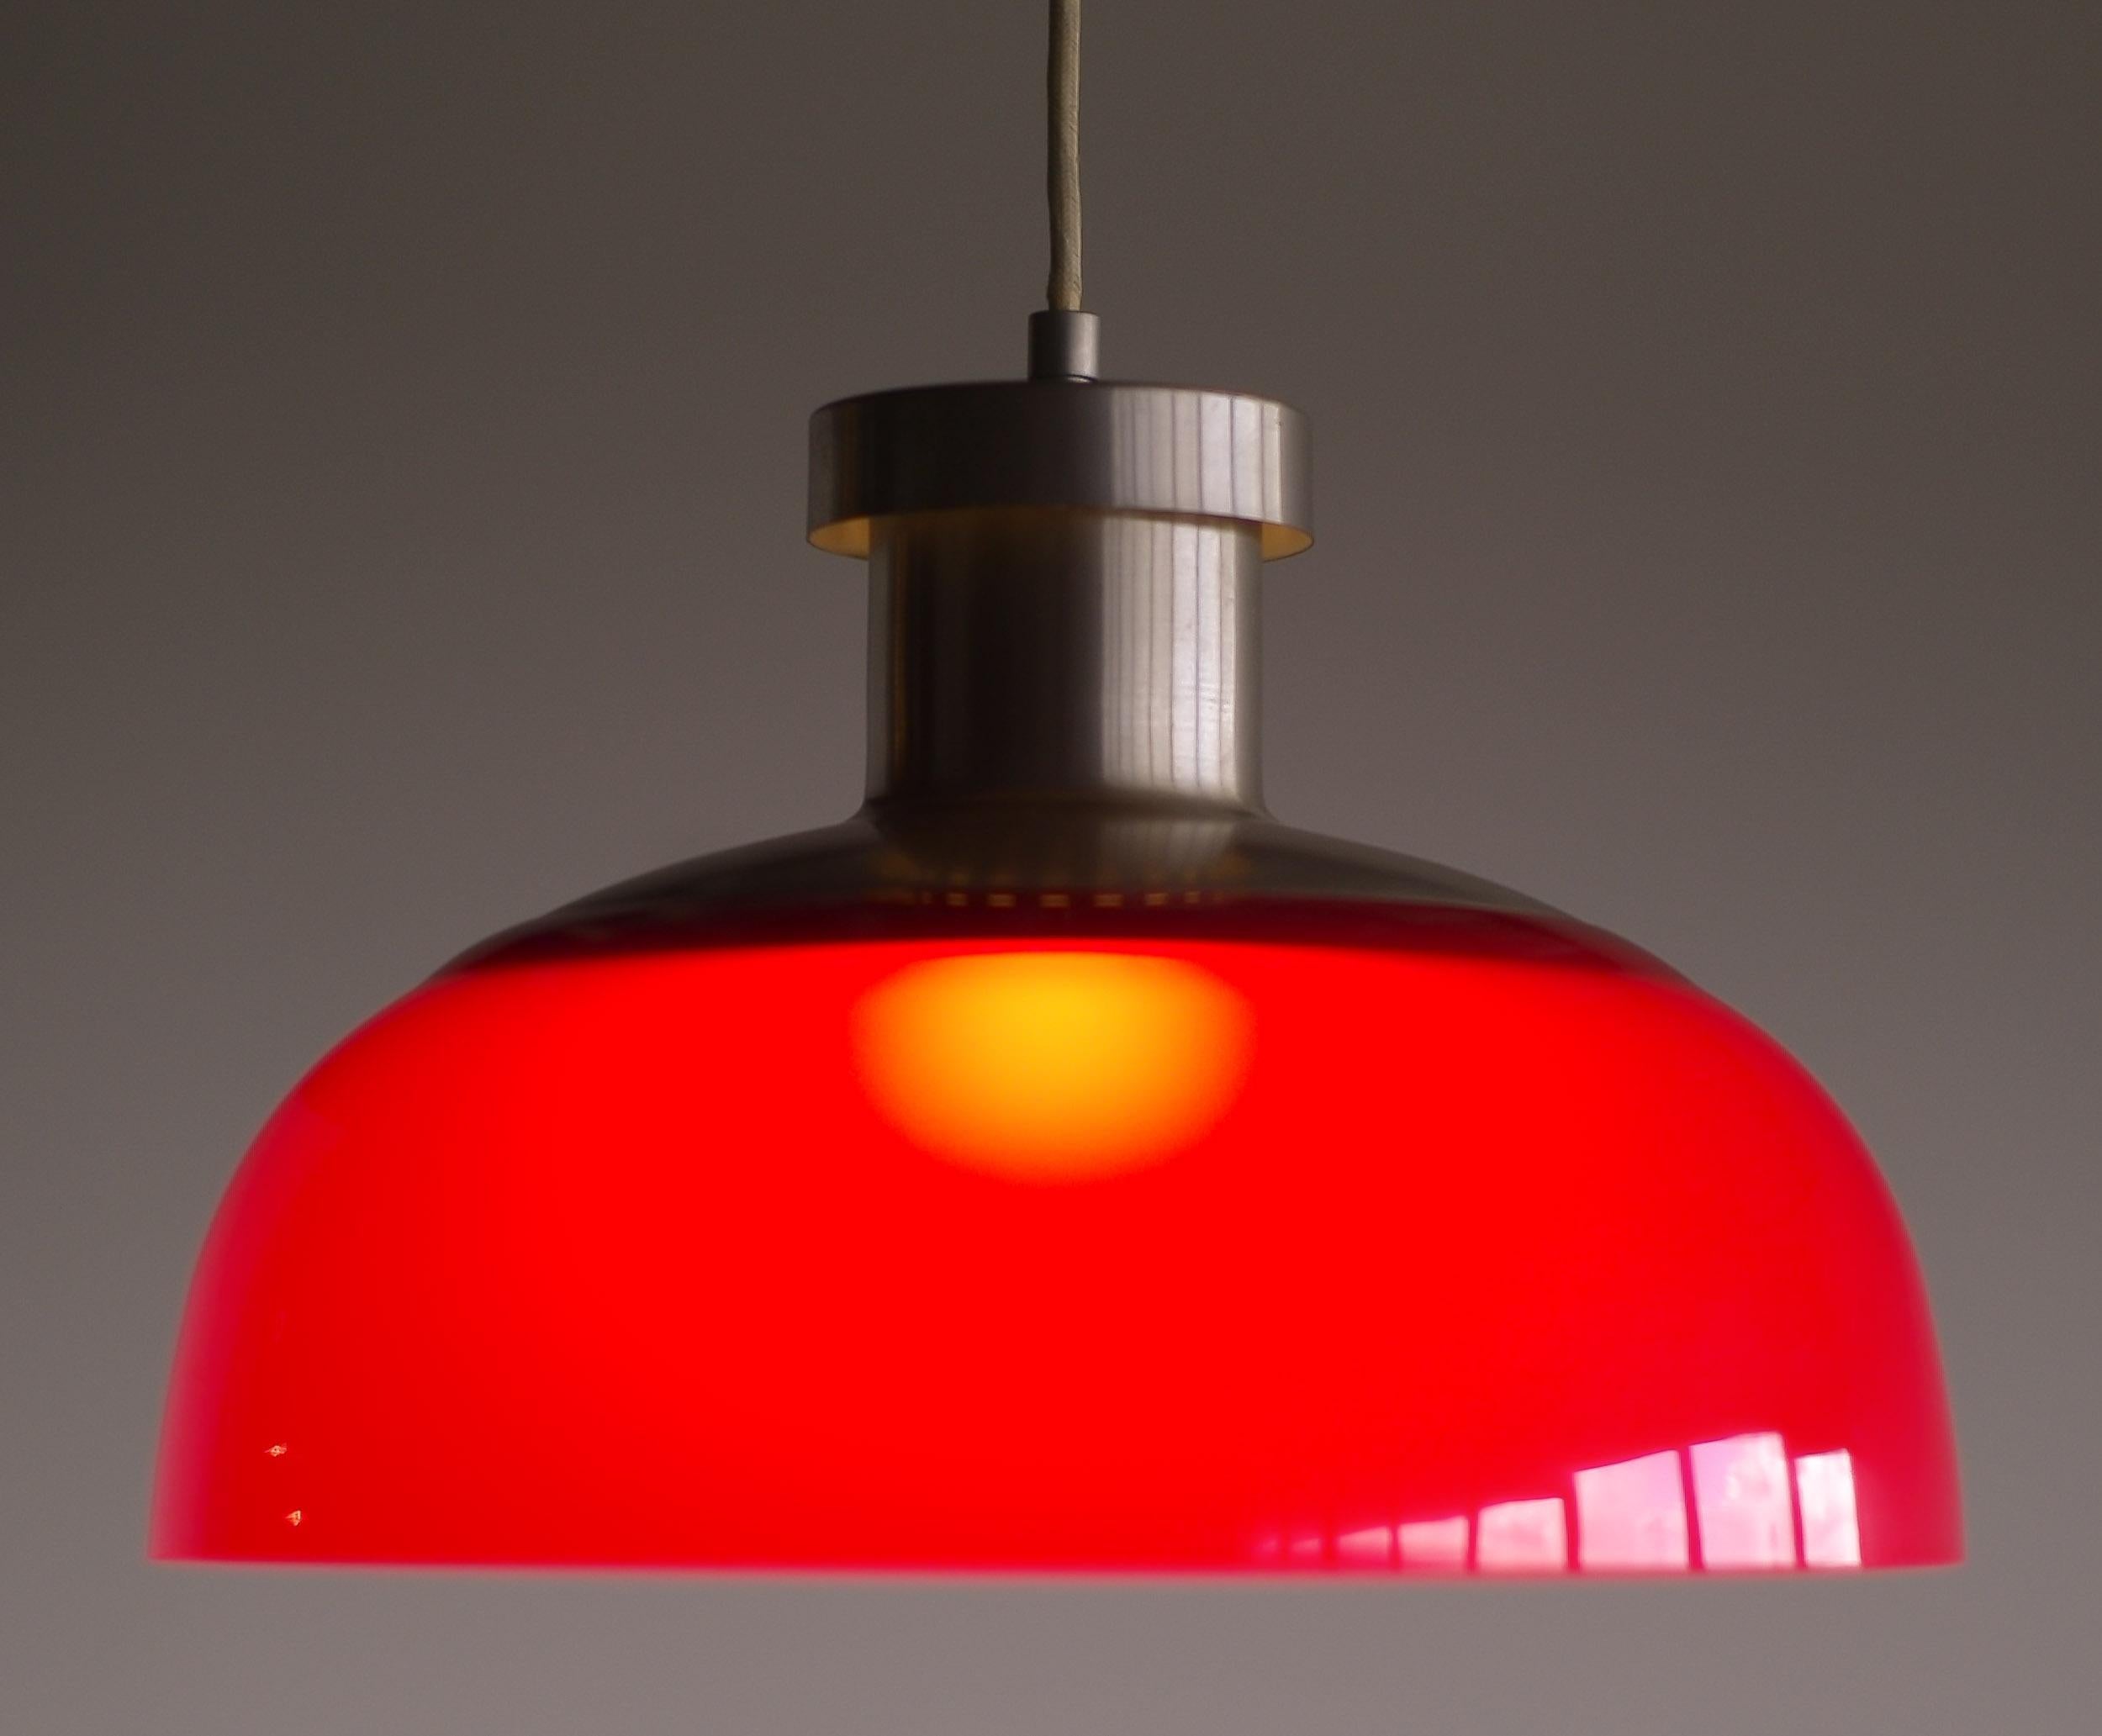 Mid-Century Modern Red Pendant Lamp 4017 Designed by Achille Castiglioni for Kartell